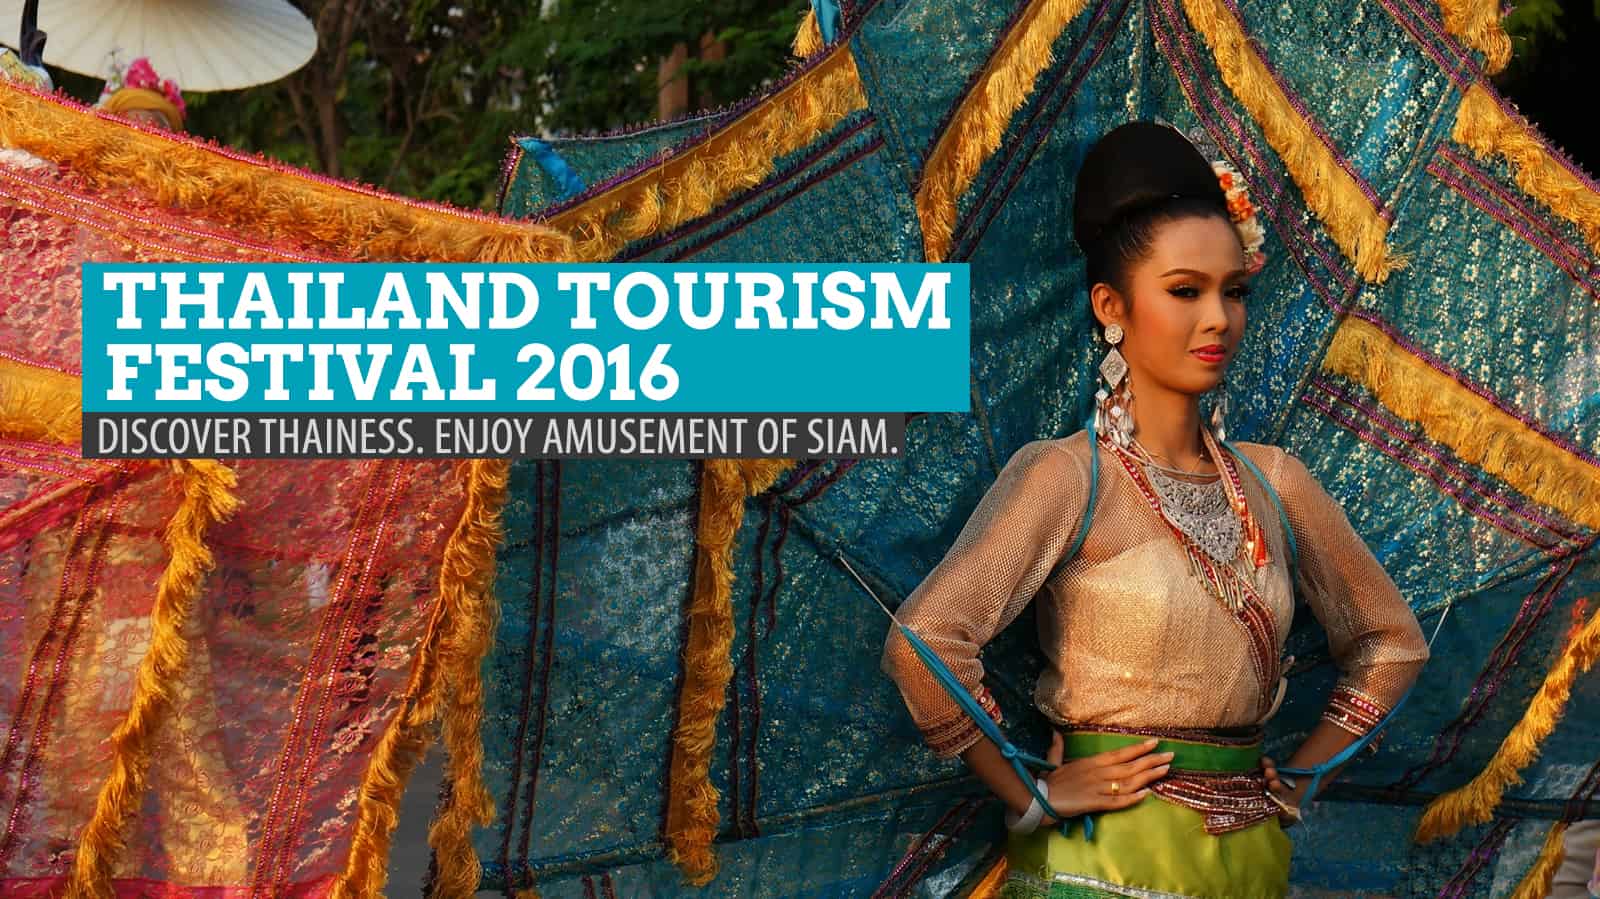 In Photos: Thailand Tourism Festival 2016